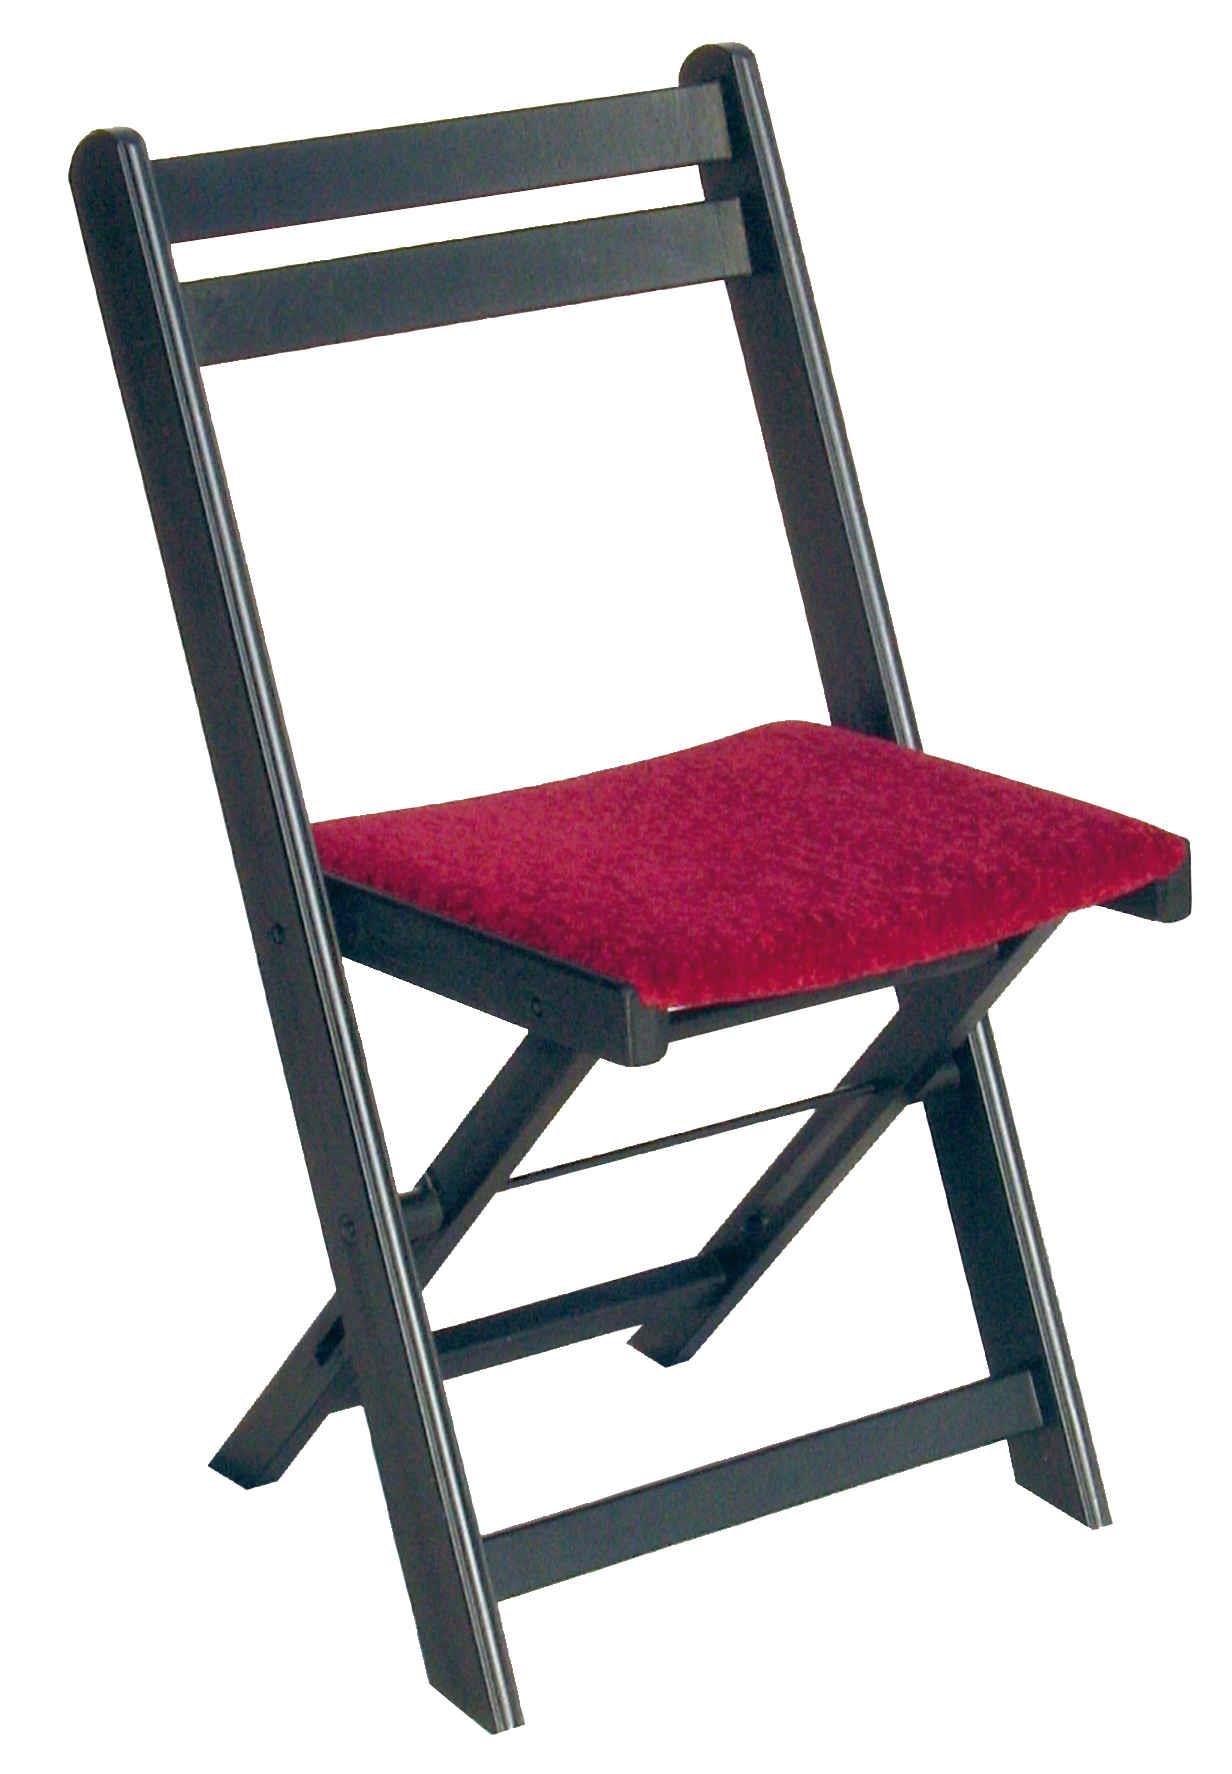 Holzklappstuhl, schwarz lackiert, Sitzpolster rot